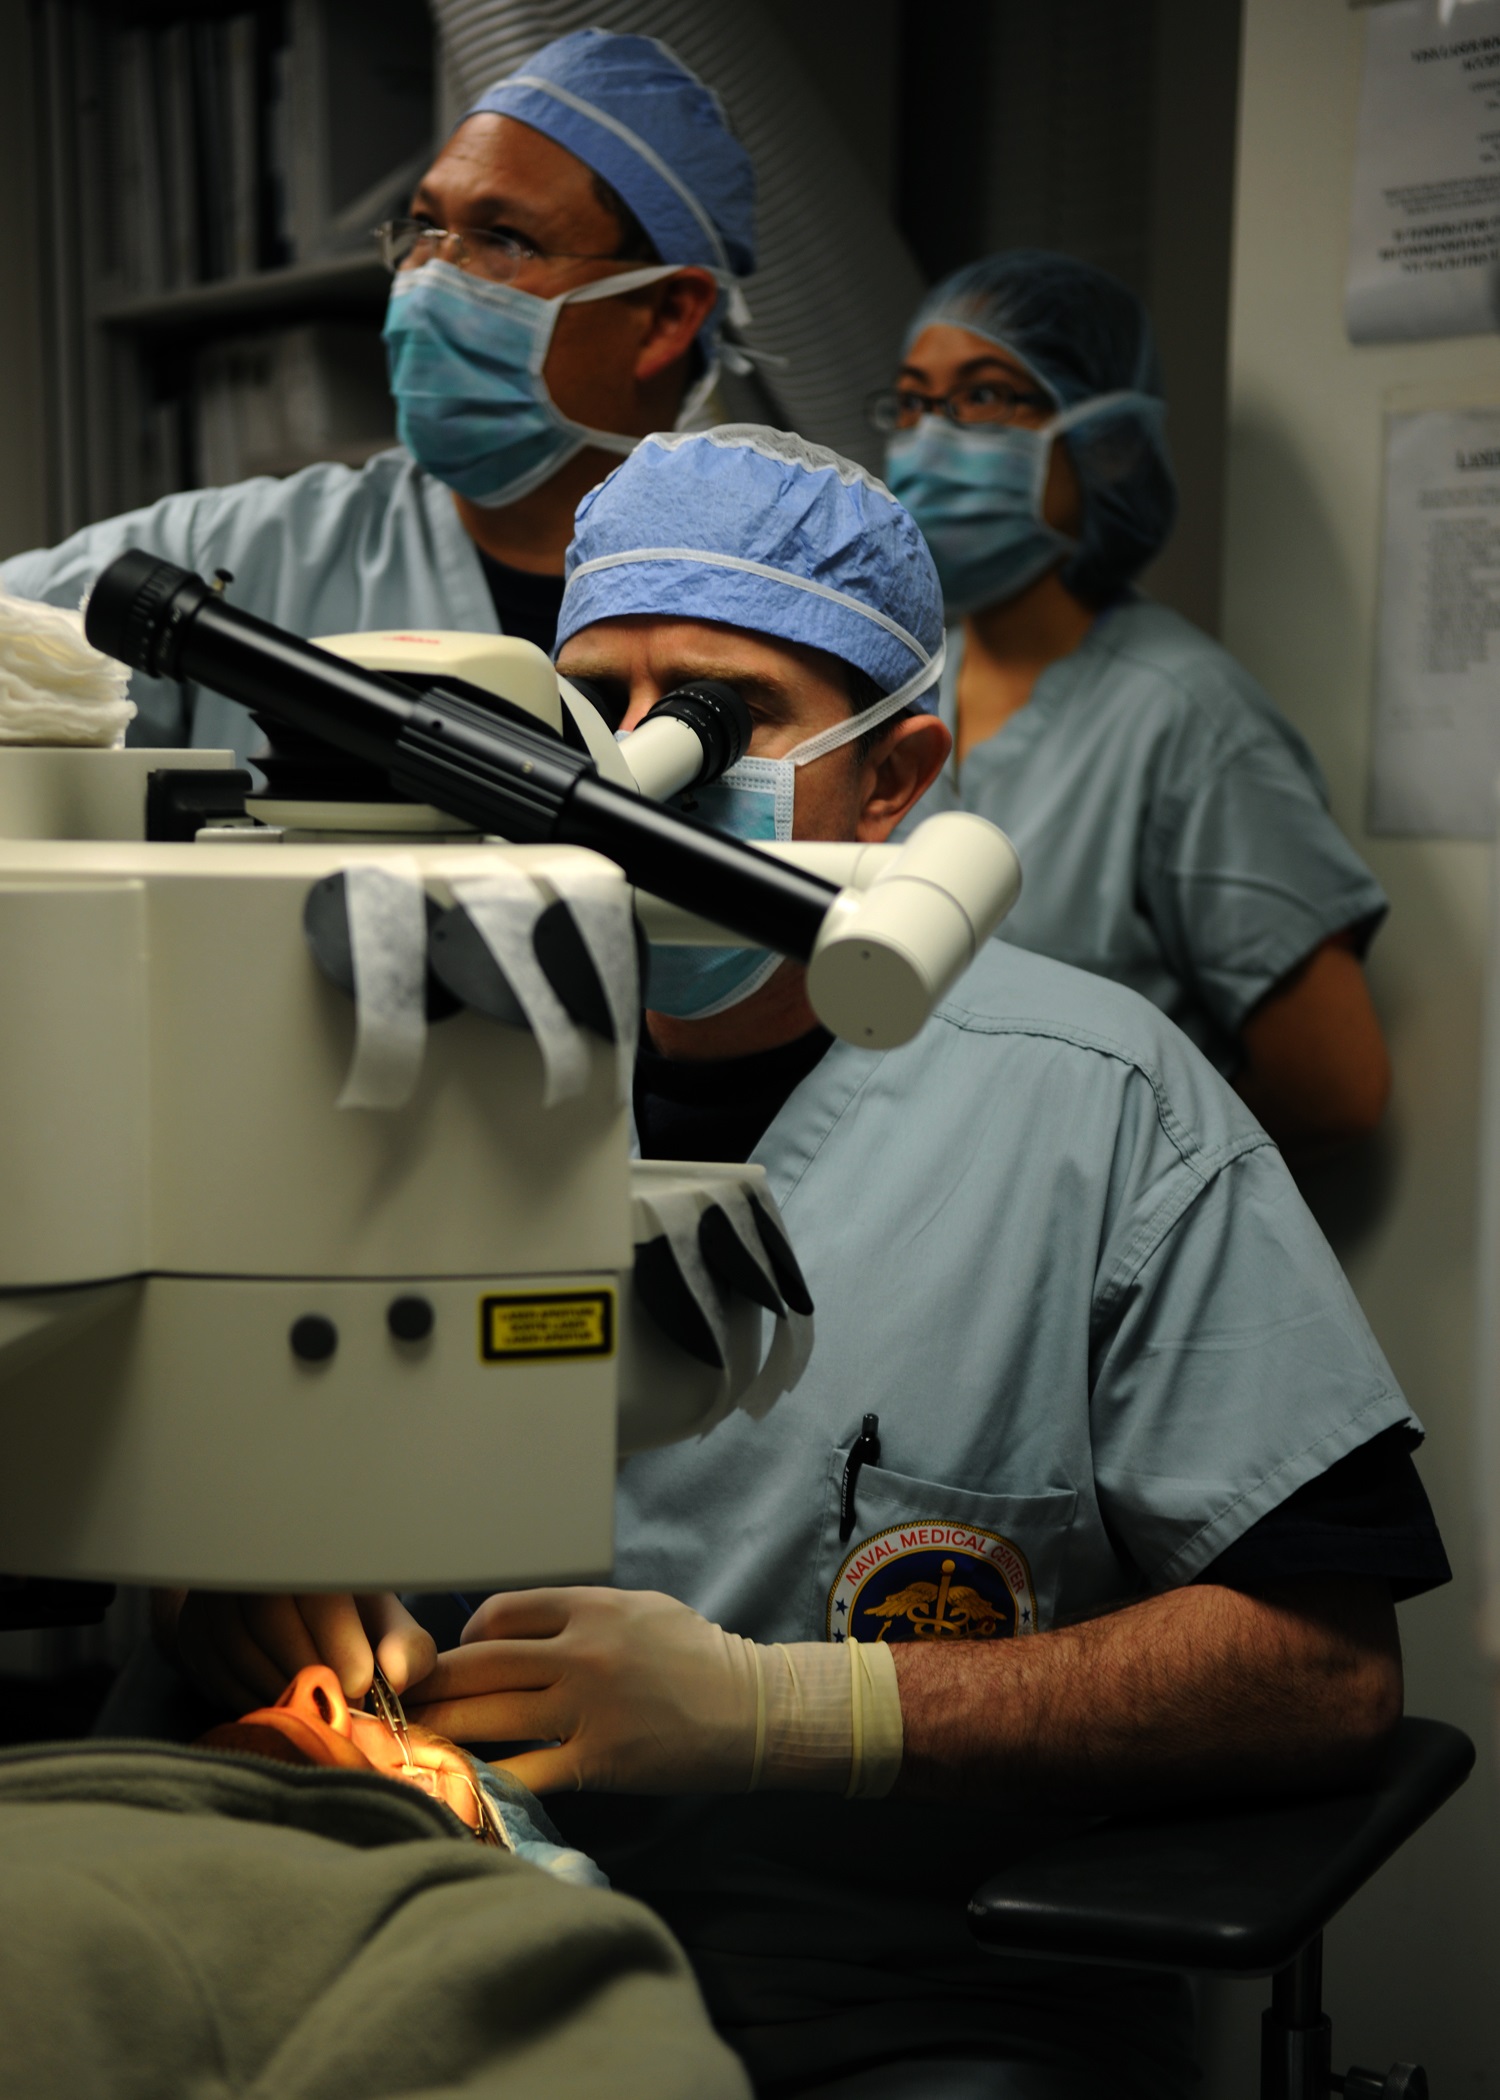 Refractive Corneal Surgery in Iran